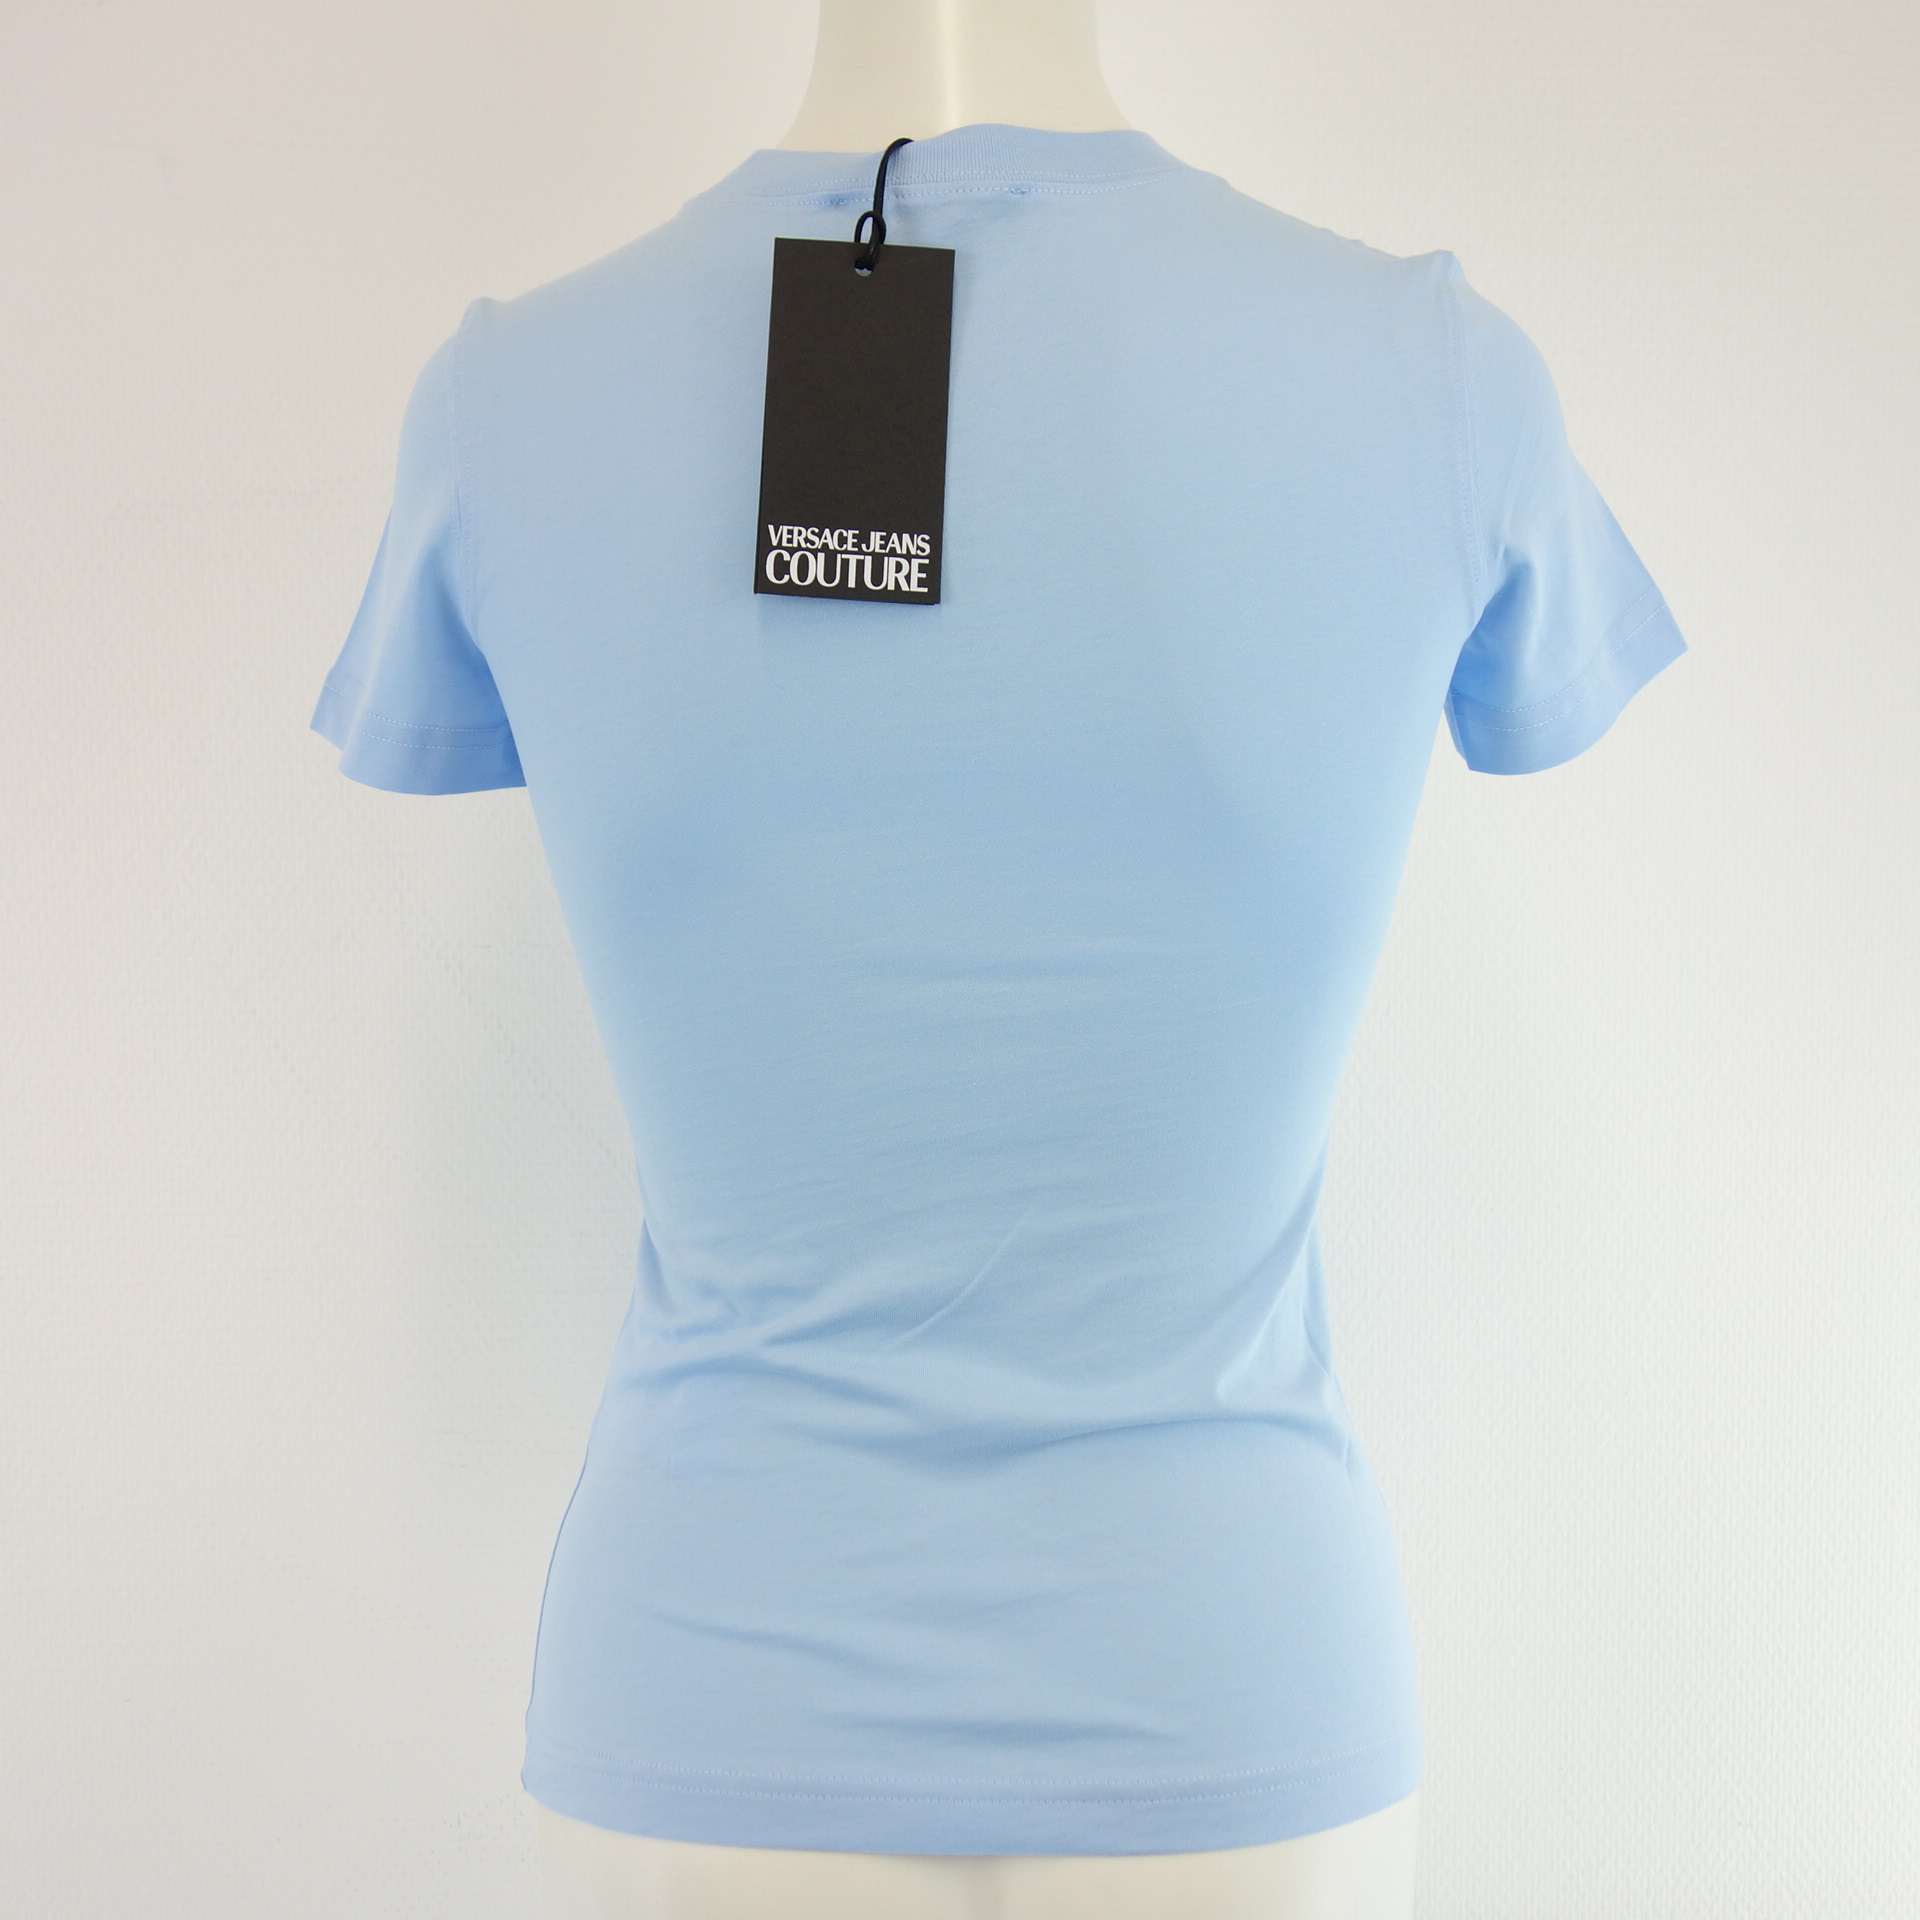 VERSACE JEANS COUTURE Damen Shirt T-Shirt Oberteil Blau Slim Print 